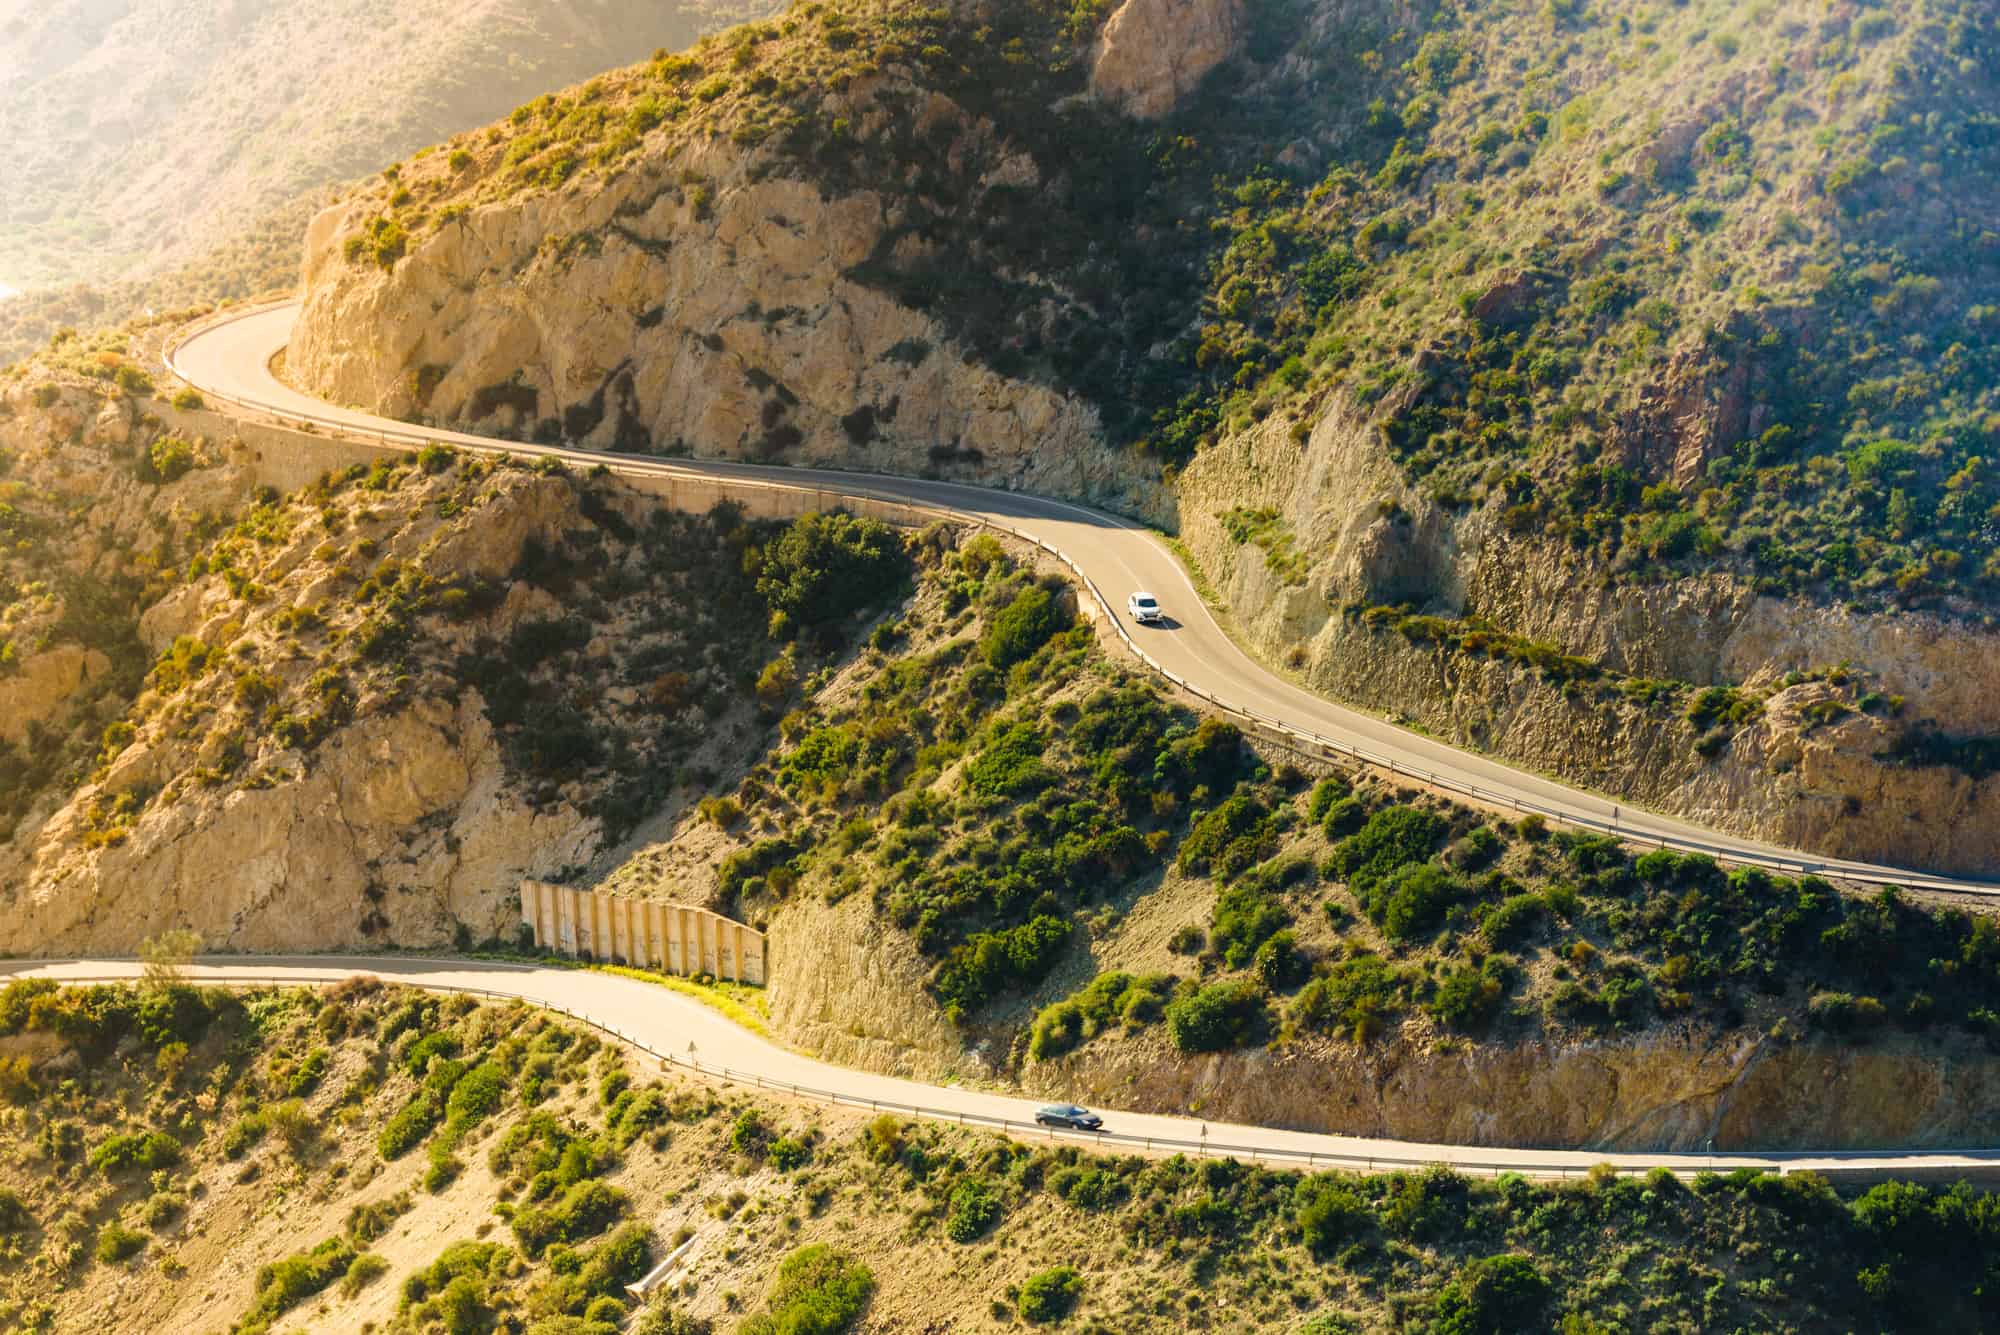 From Malaga to Marbella by Car